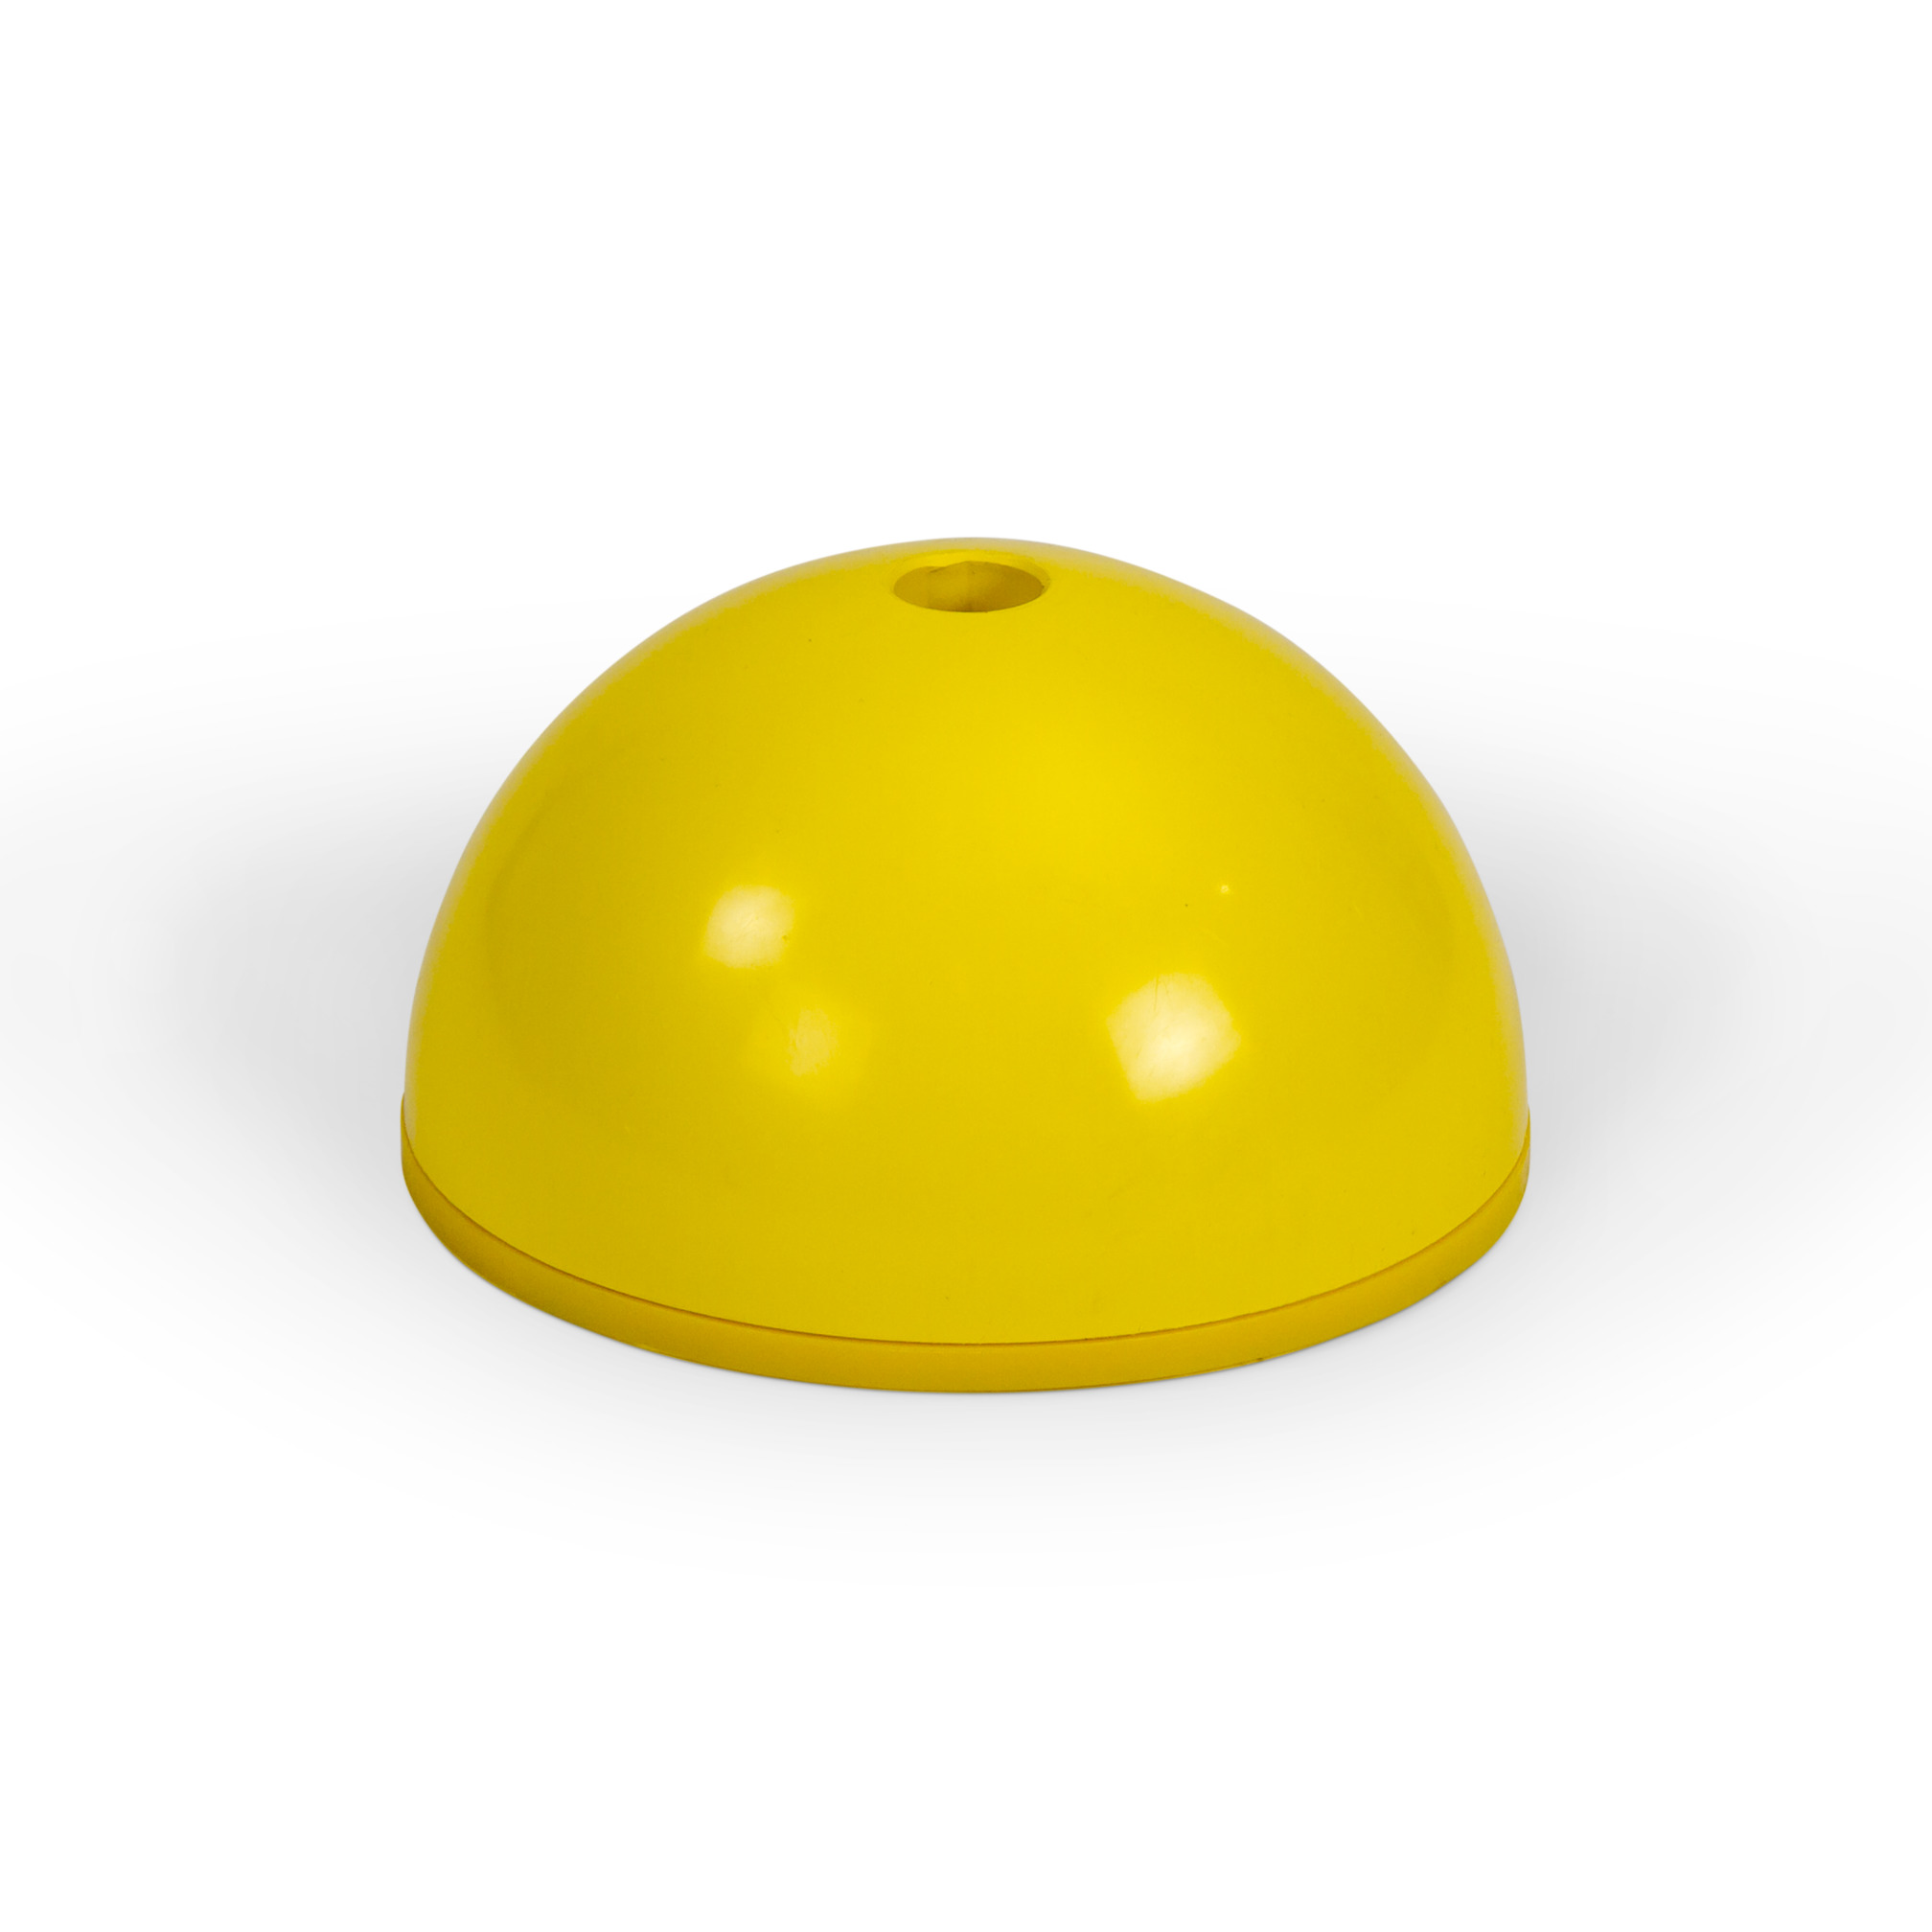 Combi pole base, yellow